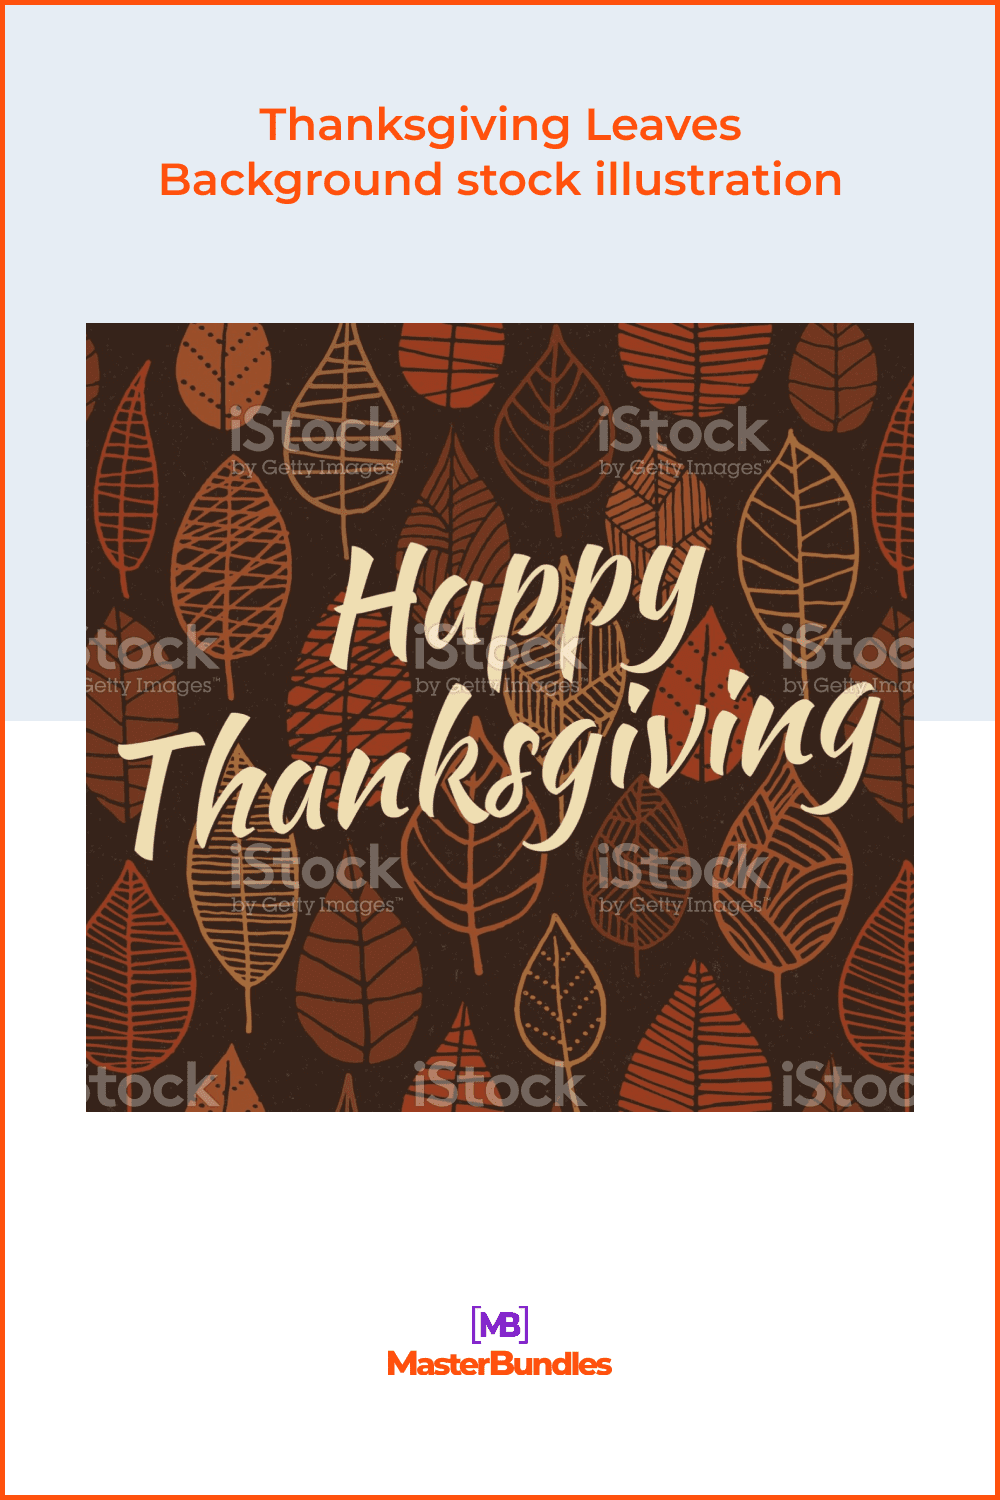 Thanksgiving leaves background stock illustration.